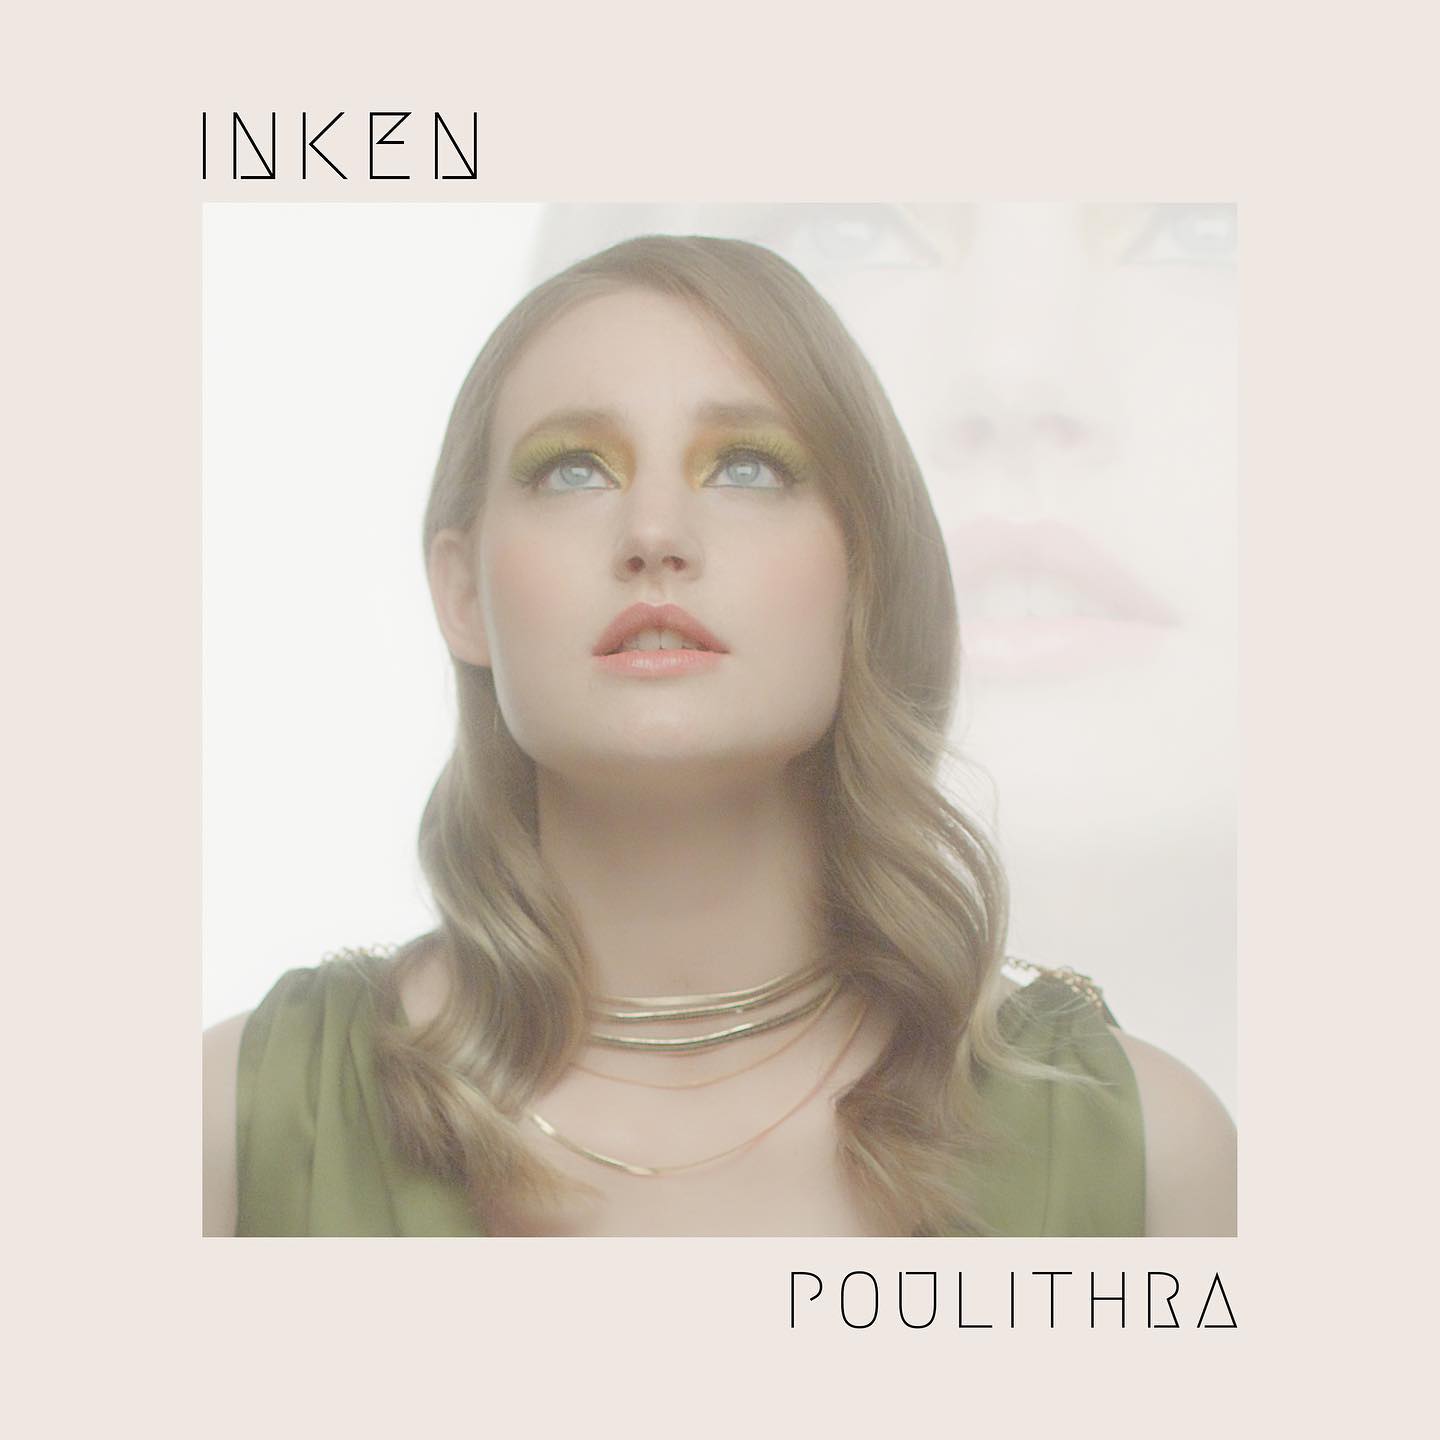 Inken – Poulithra (Single)